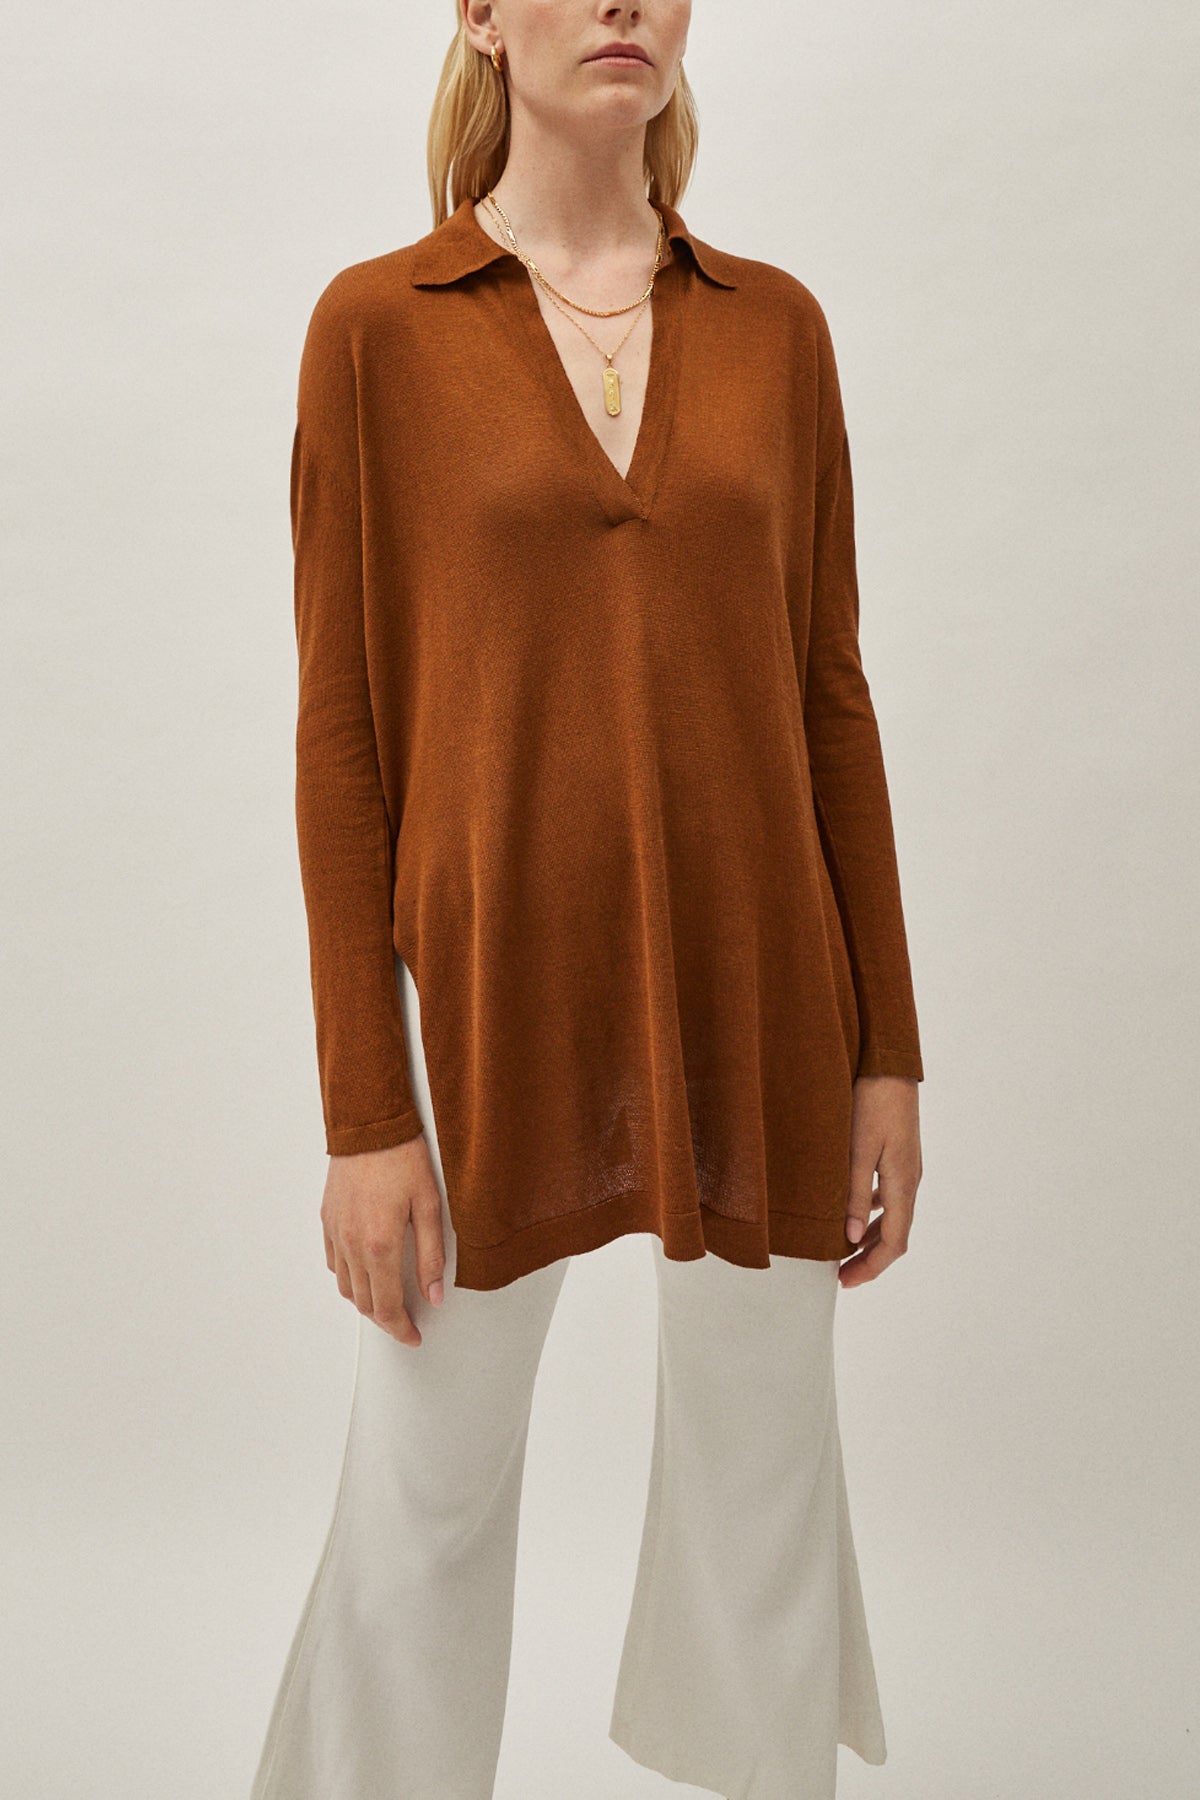 Brick Brown | The Silk Cotton Tunic – Imperfect Version